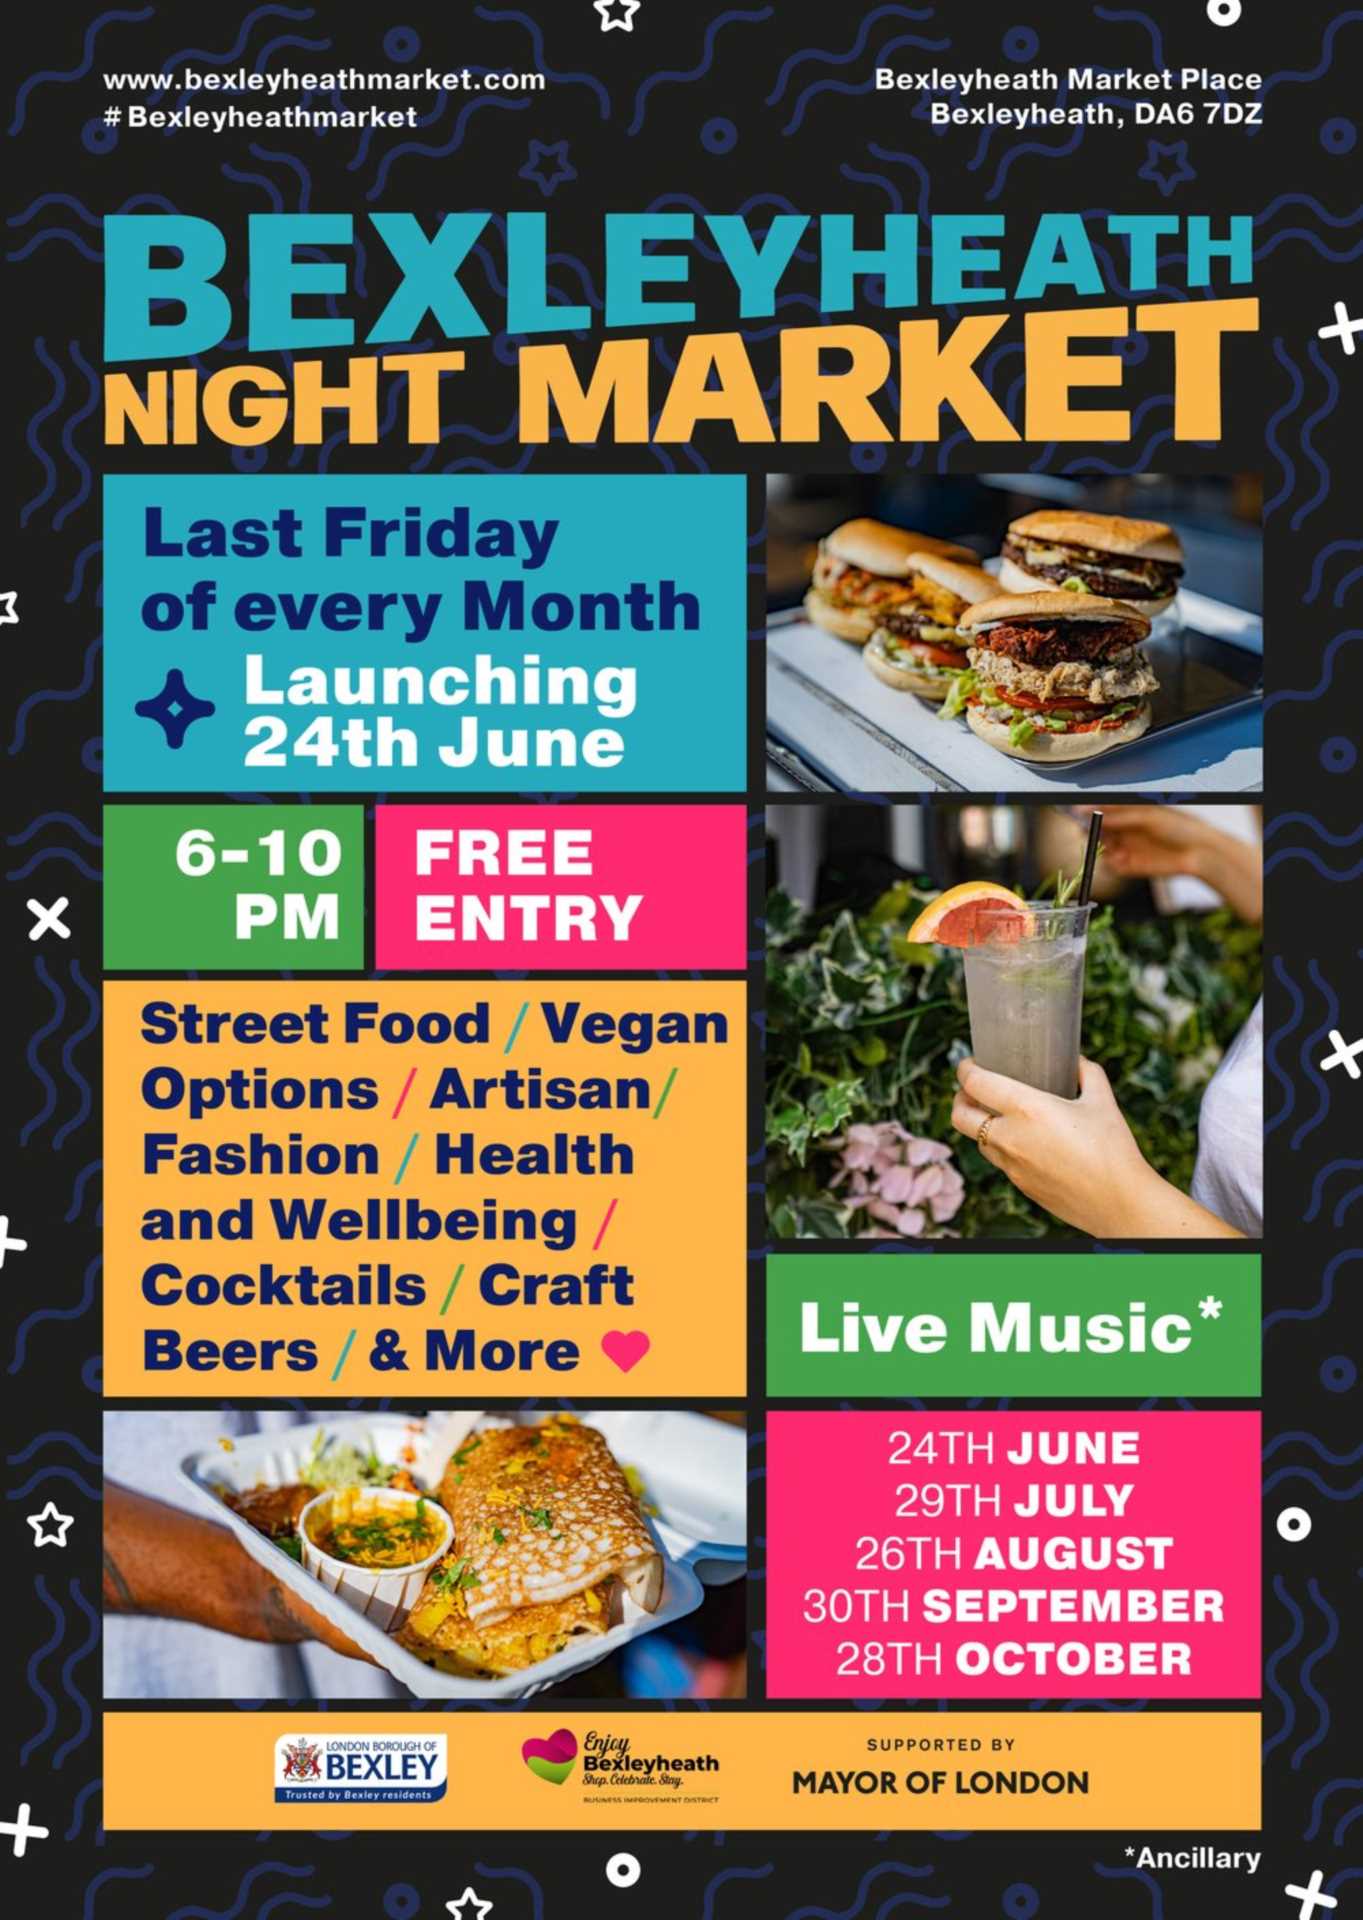 Night Markets in Bexleyheath from 24th June.